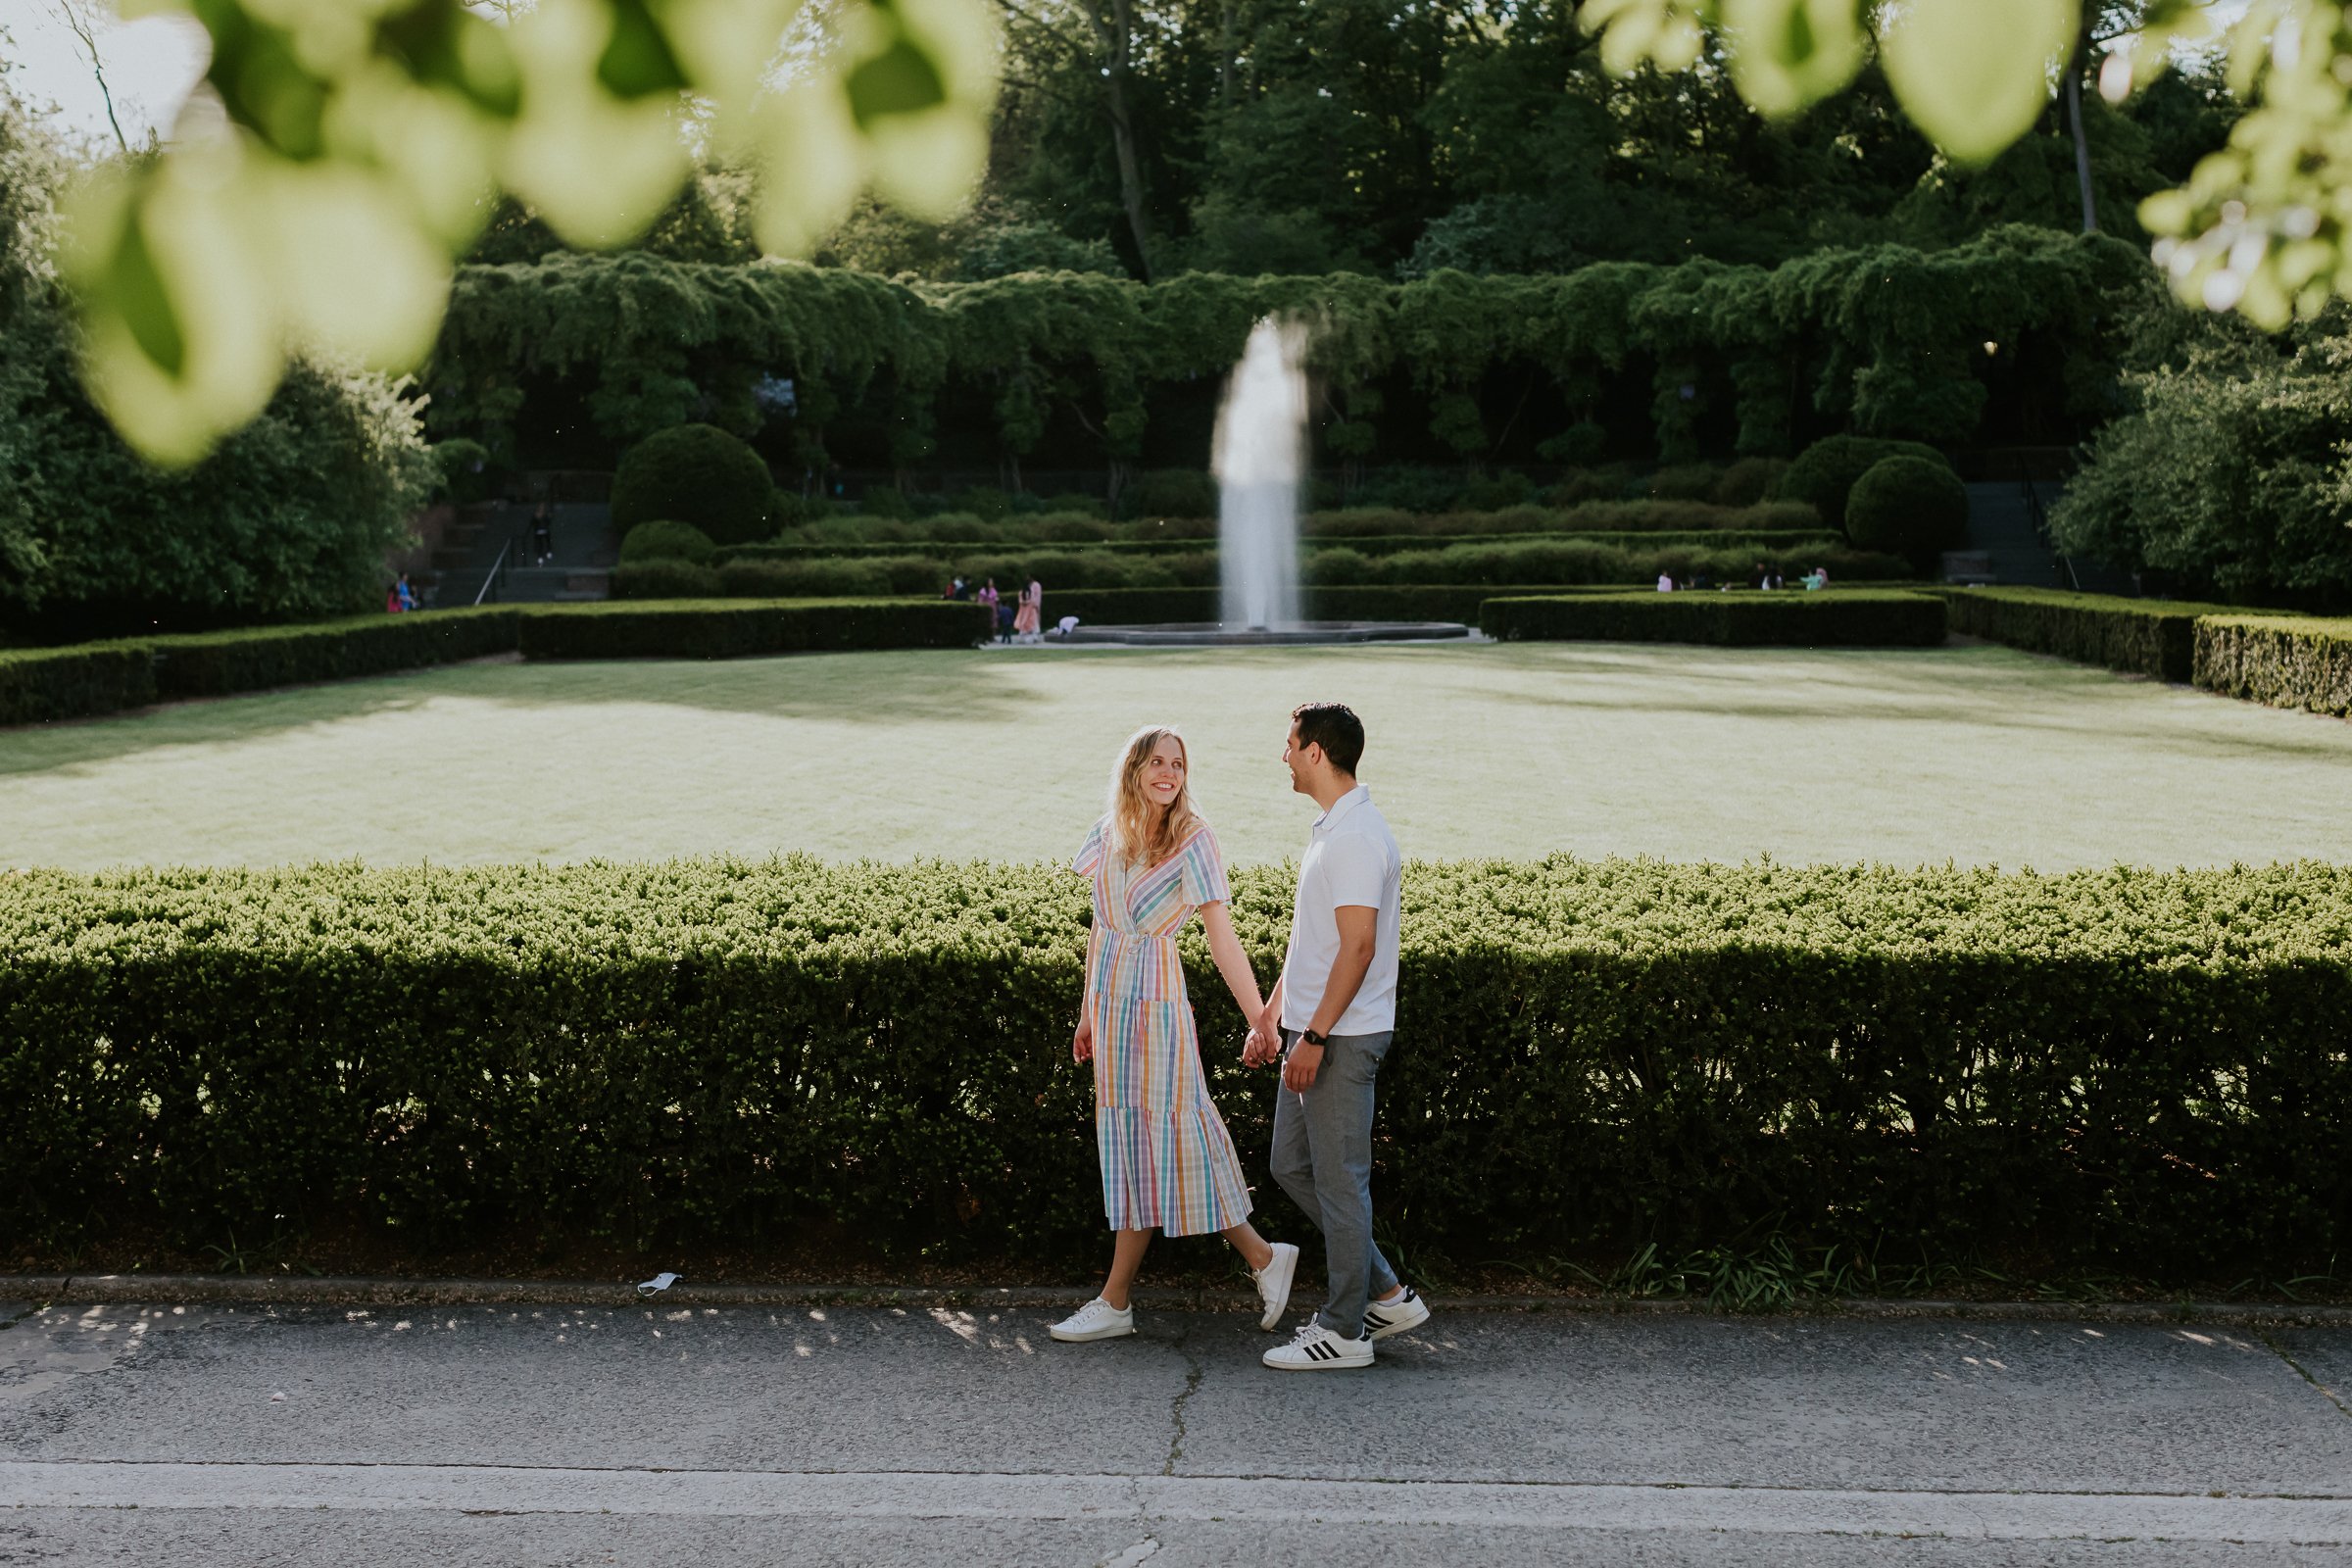 Conservatory-Garden-Central-Park-Engagement-Photographer-4.jpg